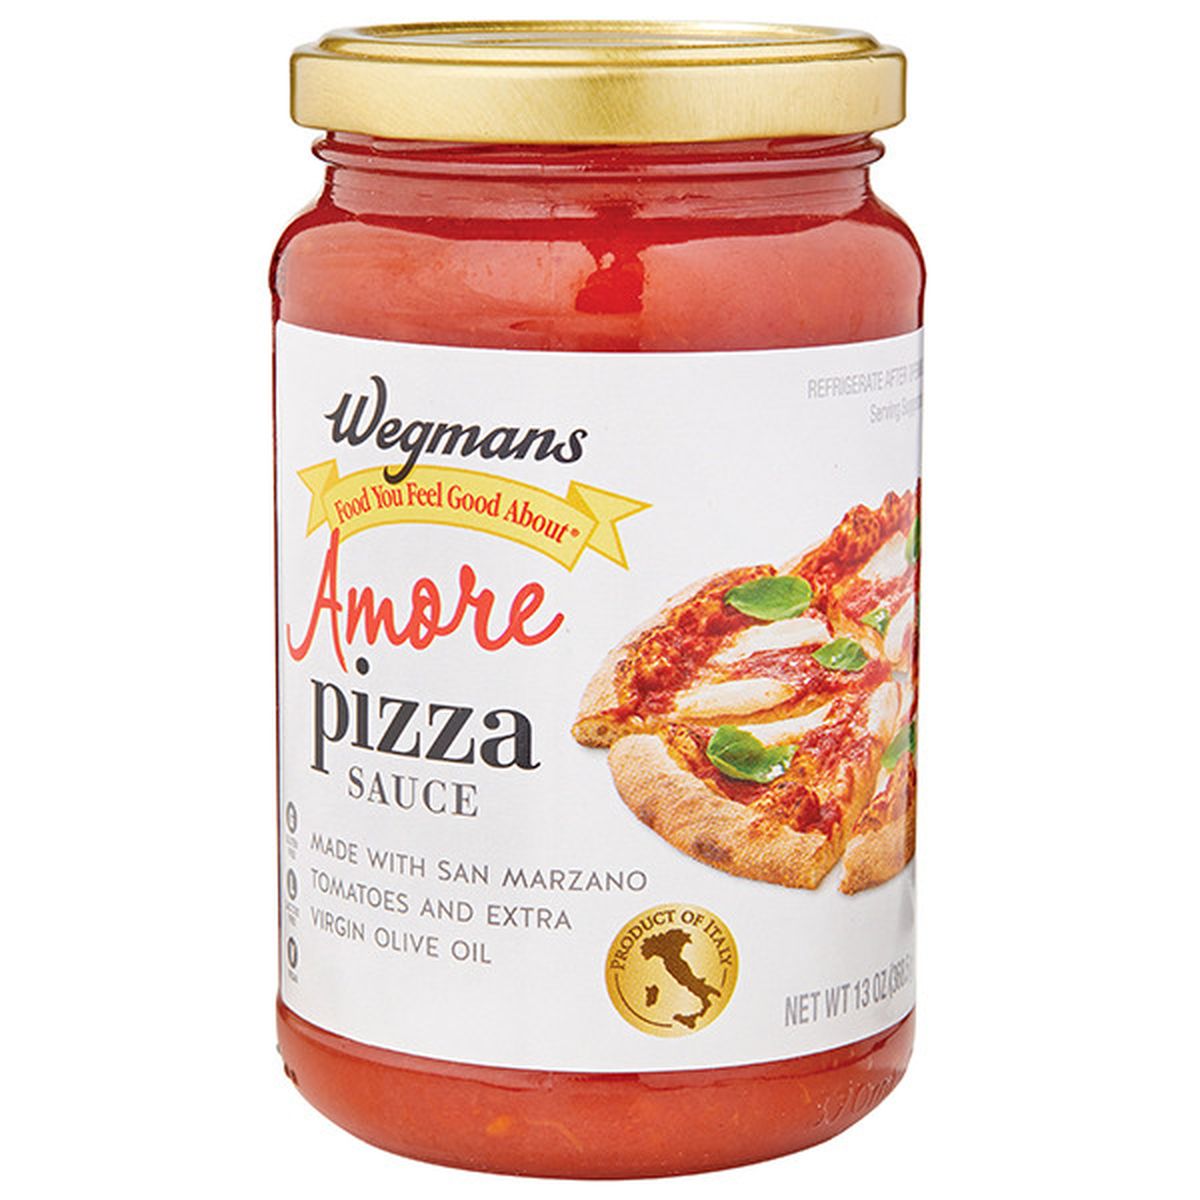 Calories in Wegmans Amore Pizza Sauce